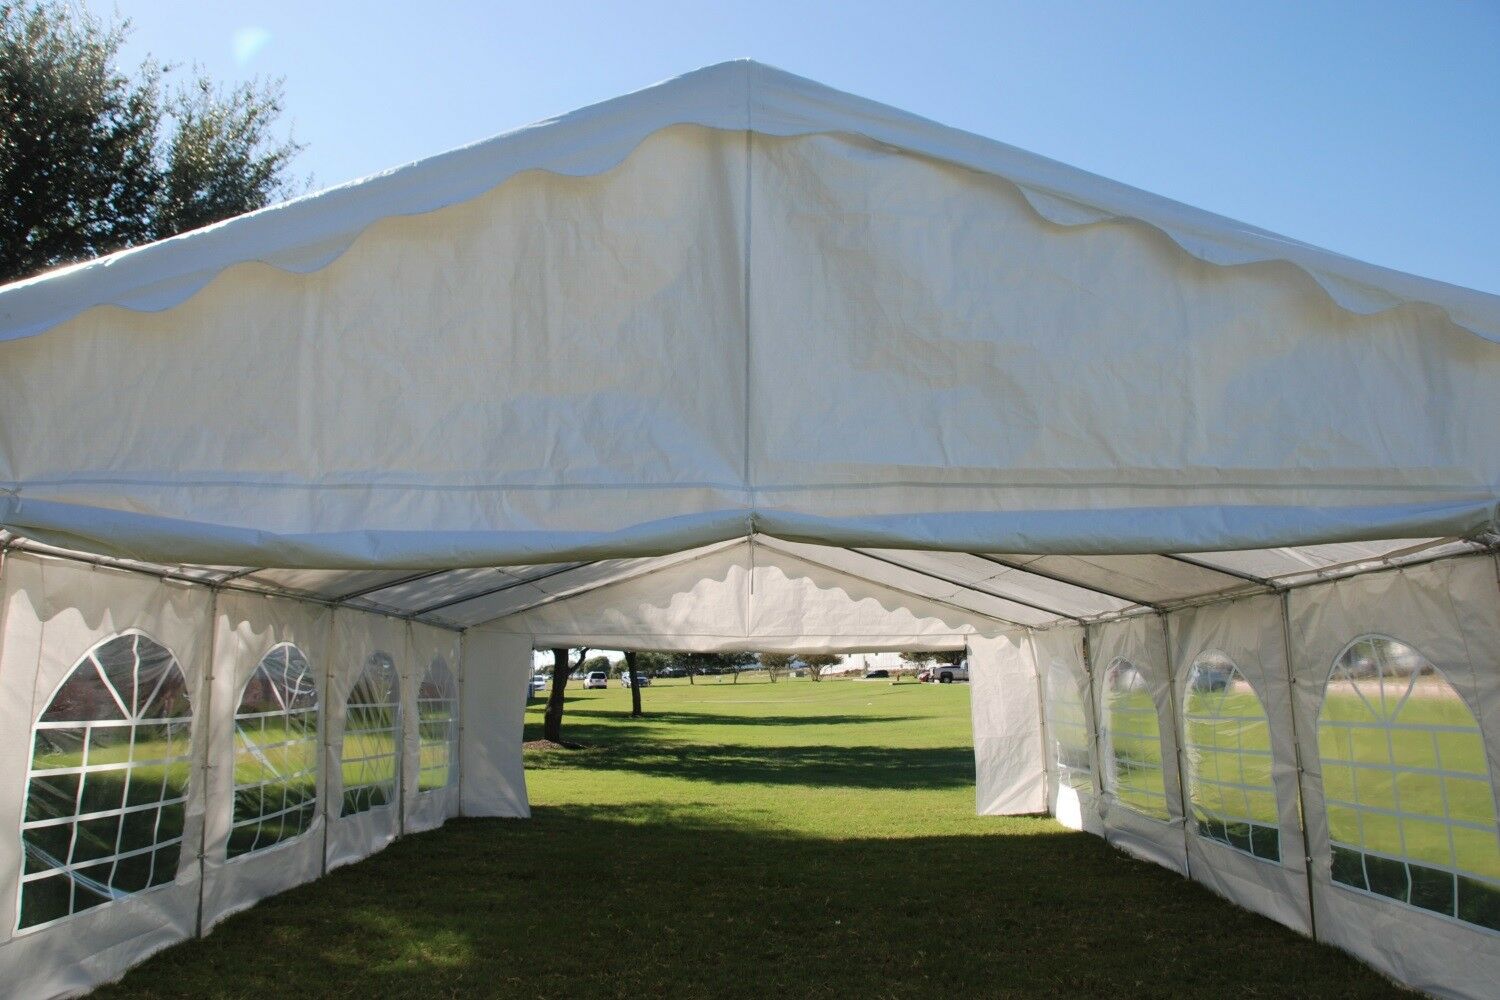 32 x 20 Budget Party Tent Canopy Gazebo - White